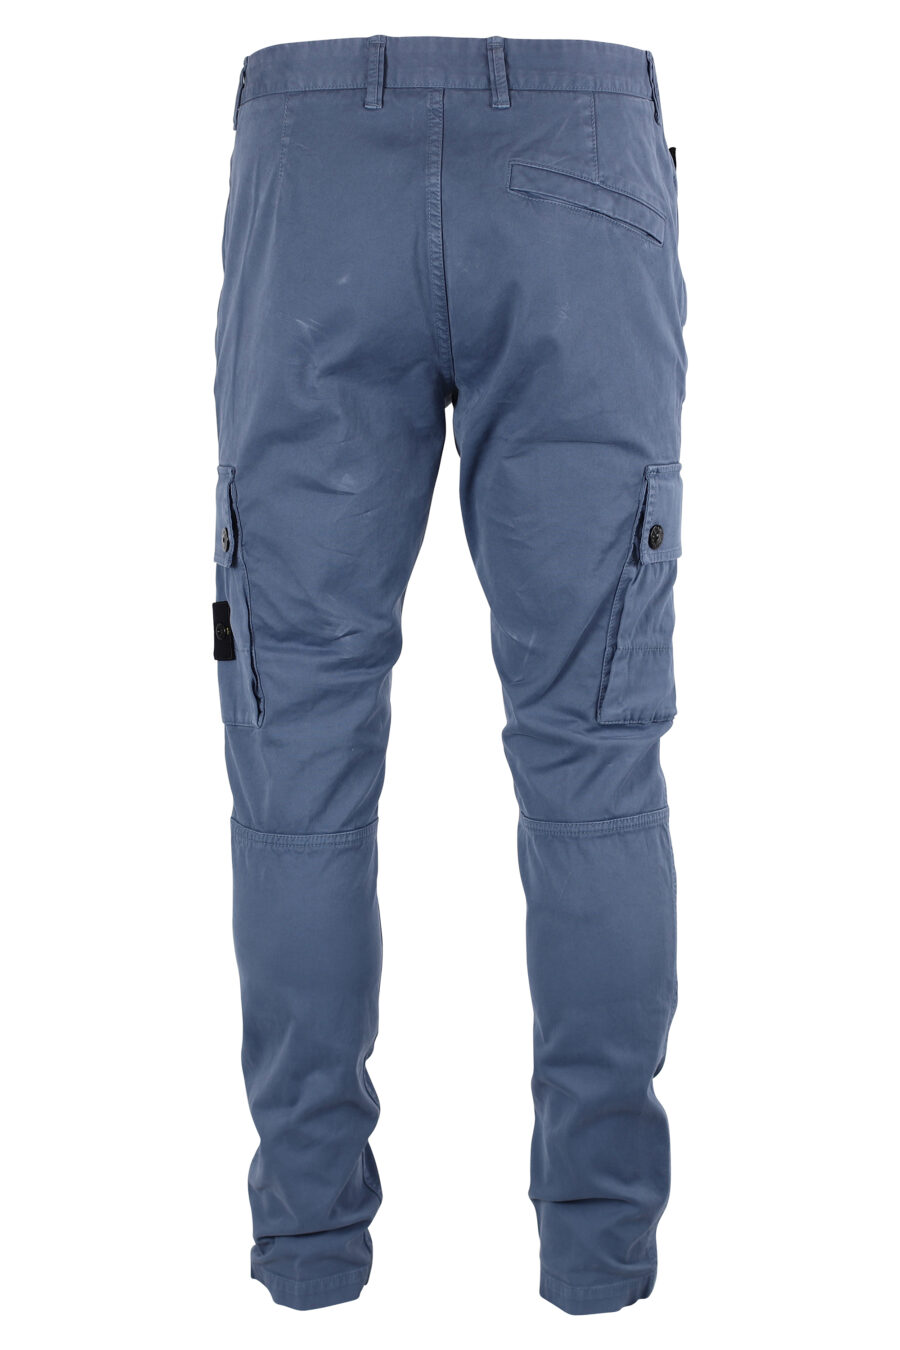 Pantalón azul grisáceo con bolsillos y parche lateral - IMG 8323